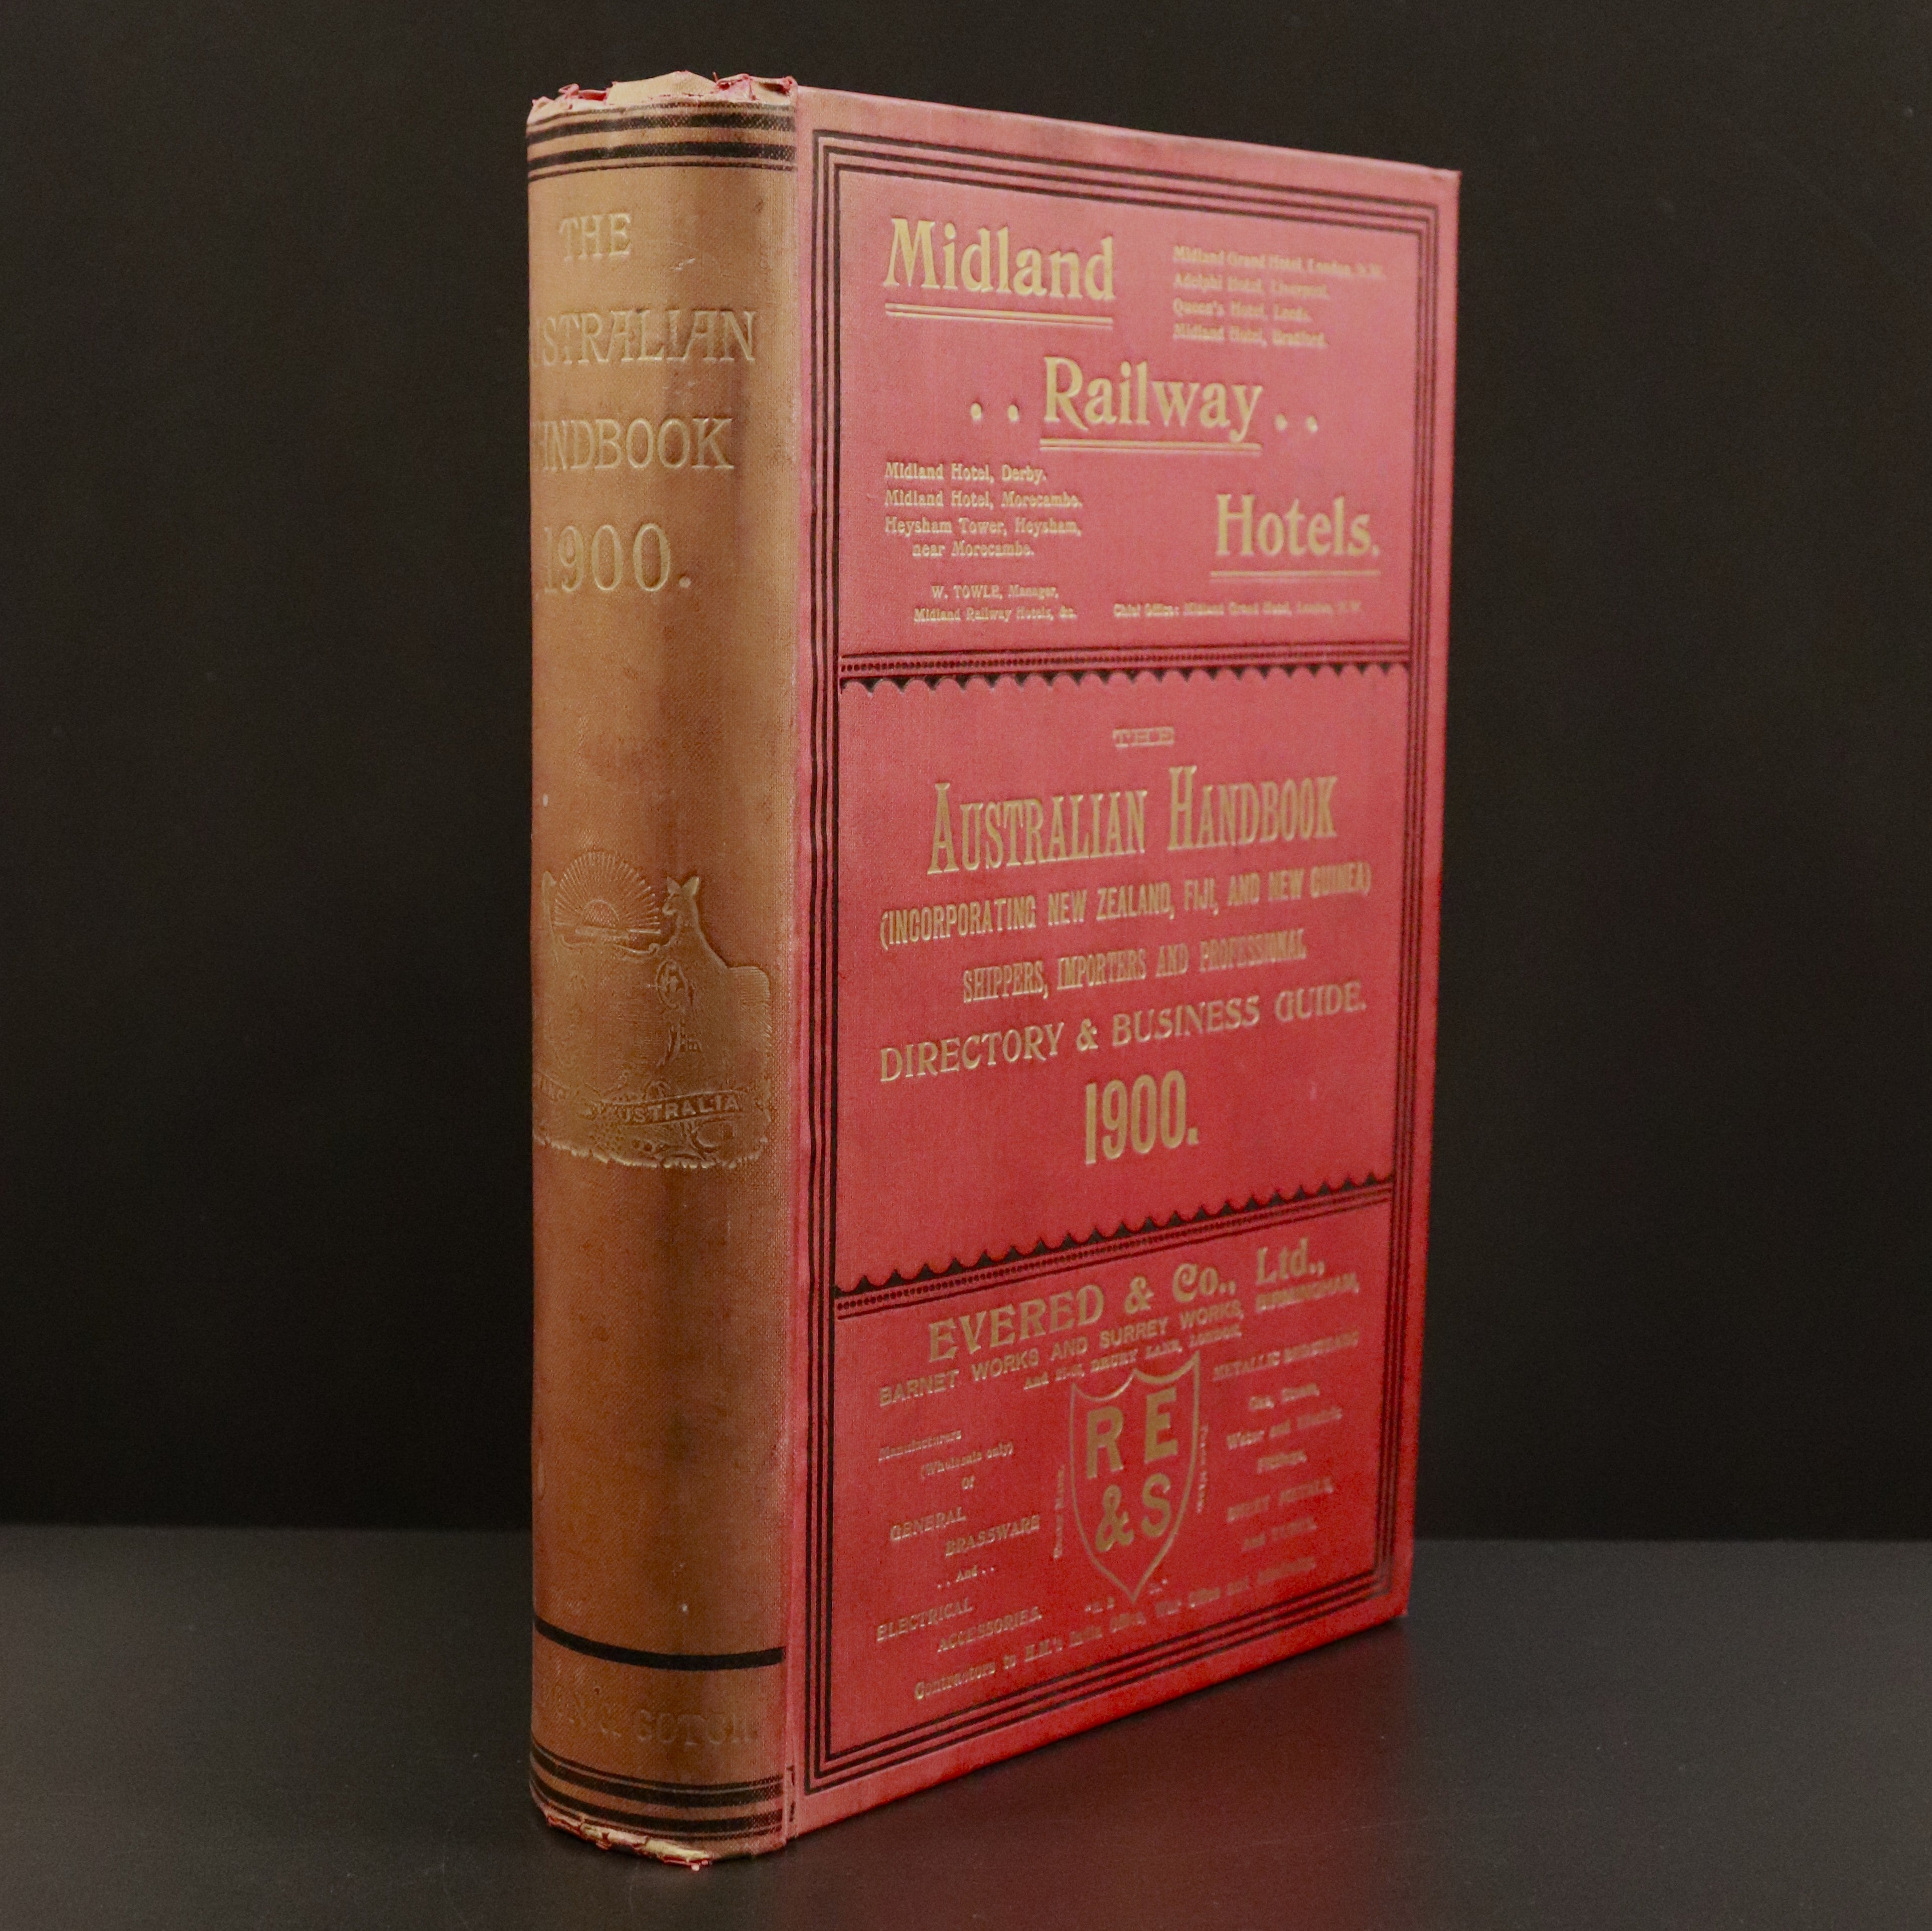 1900 Australian Handbook Directory Business Guide Antiquarian Reference Book